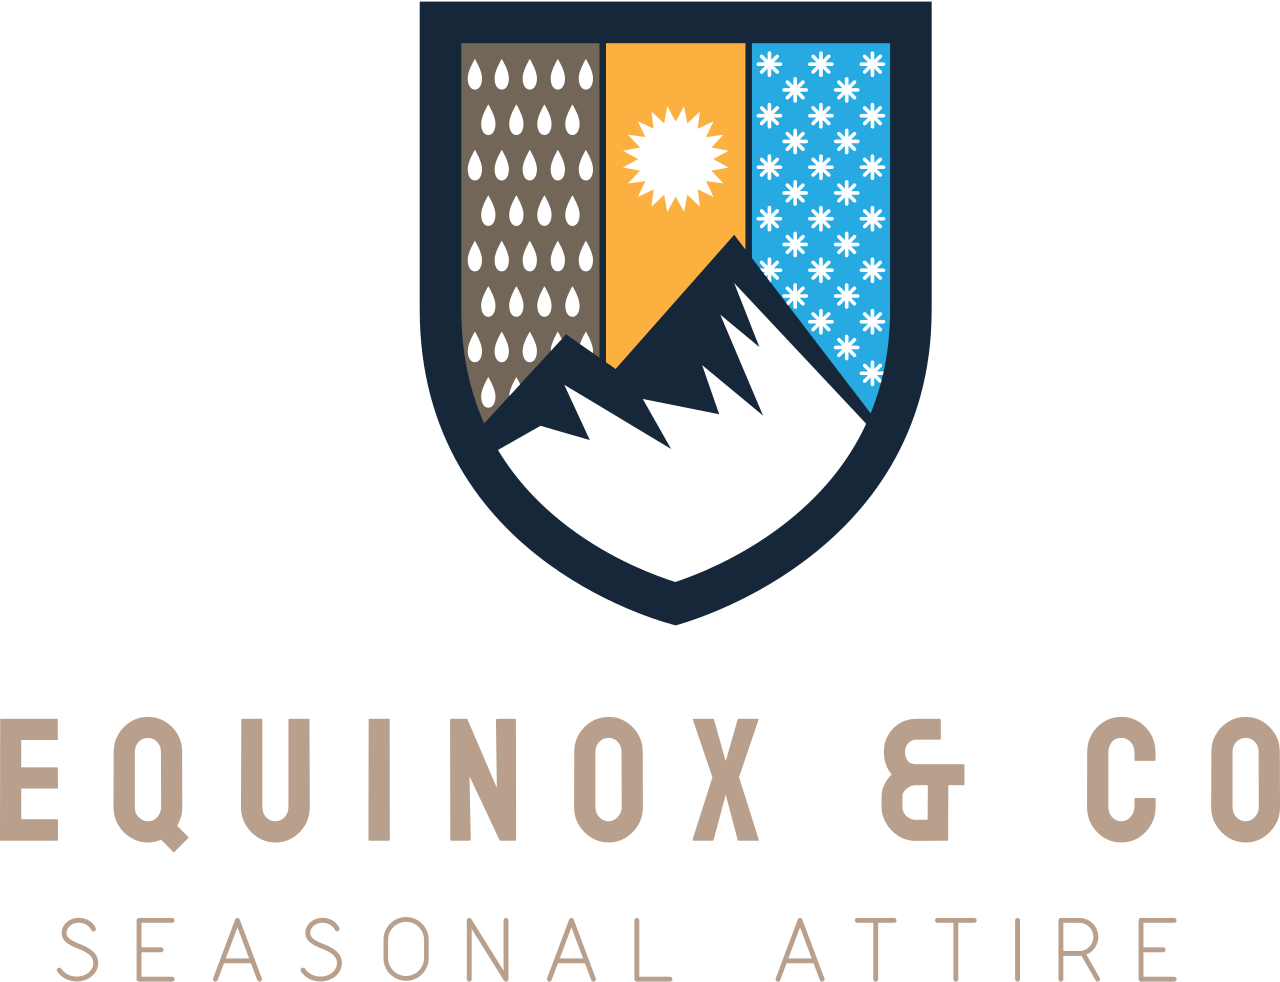 Equinox & Co 's logo